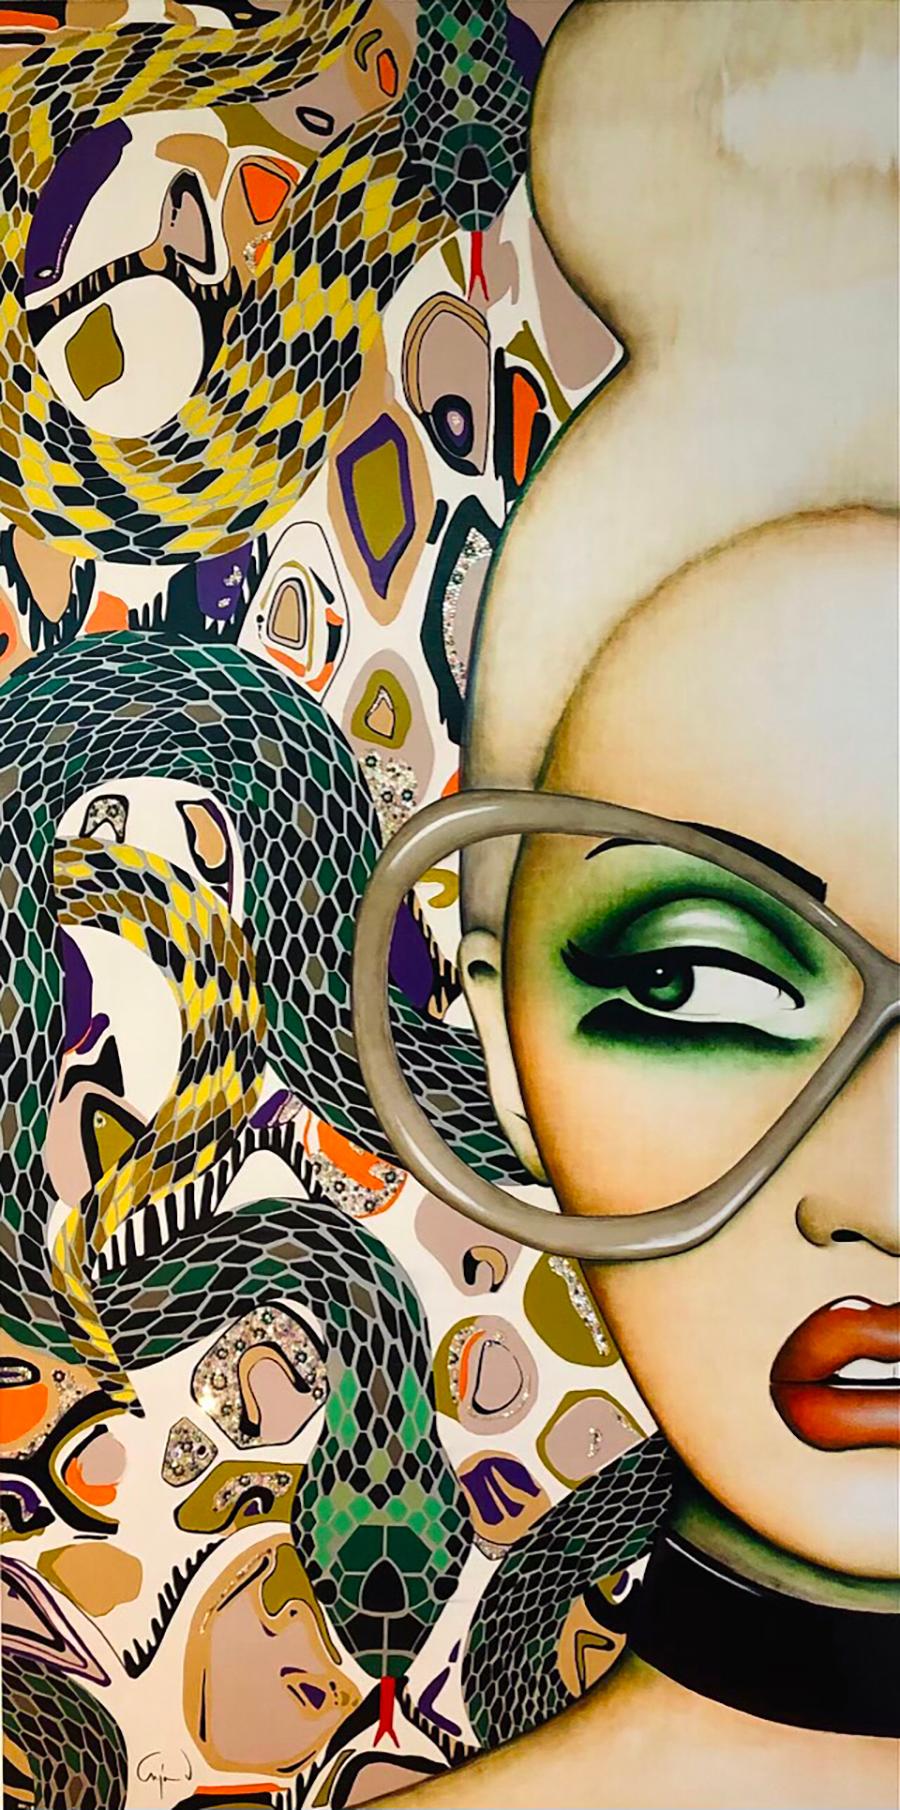 ANJA VAN HERLE
"Mrs. Hisses"
Acrylic & Swarovski Crystal on Wood
72 x 35 inches

Born in Belgium in 1969, Anja Van Herle combines a European sense of high fashion in her artwork with an American sense of wonder. Her childhood years were devoted to